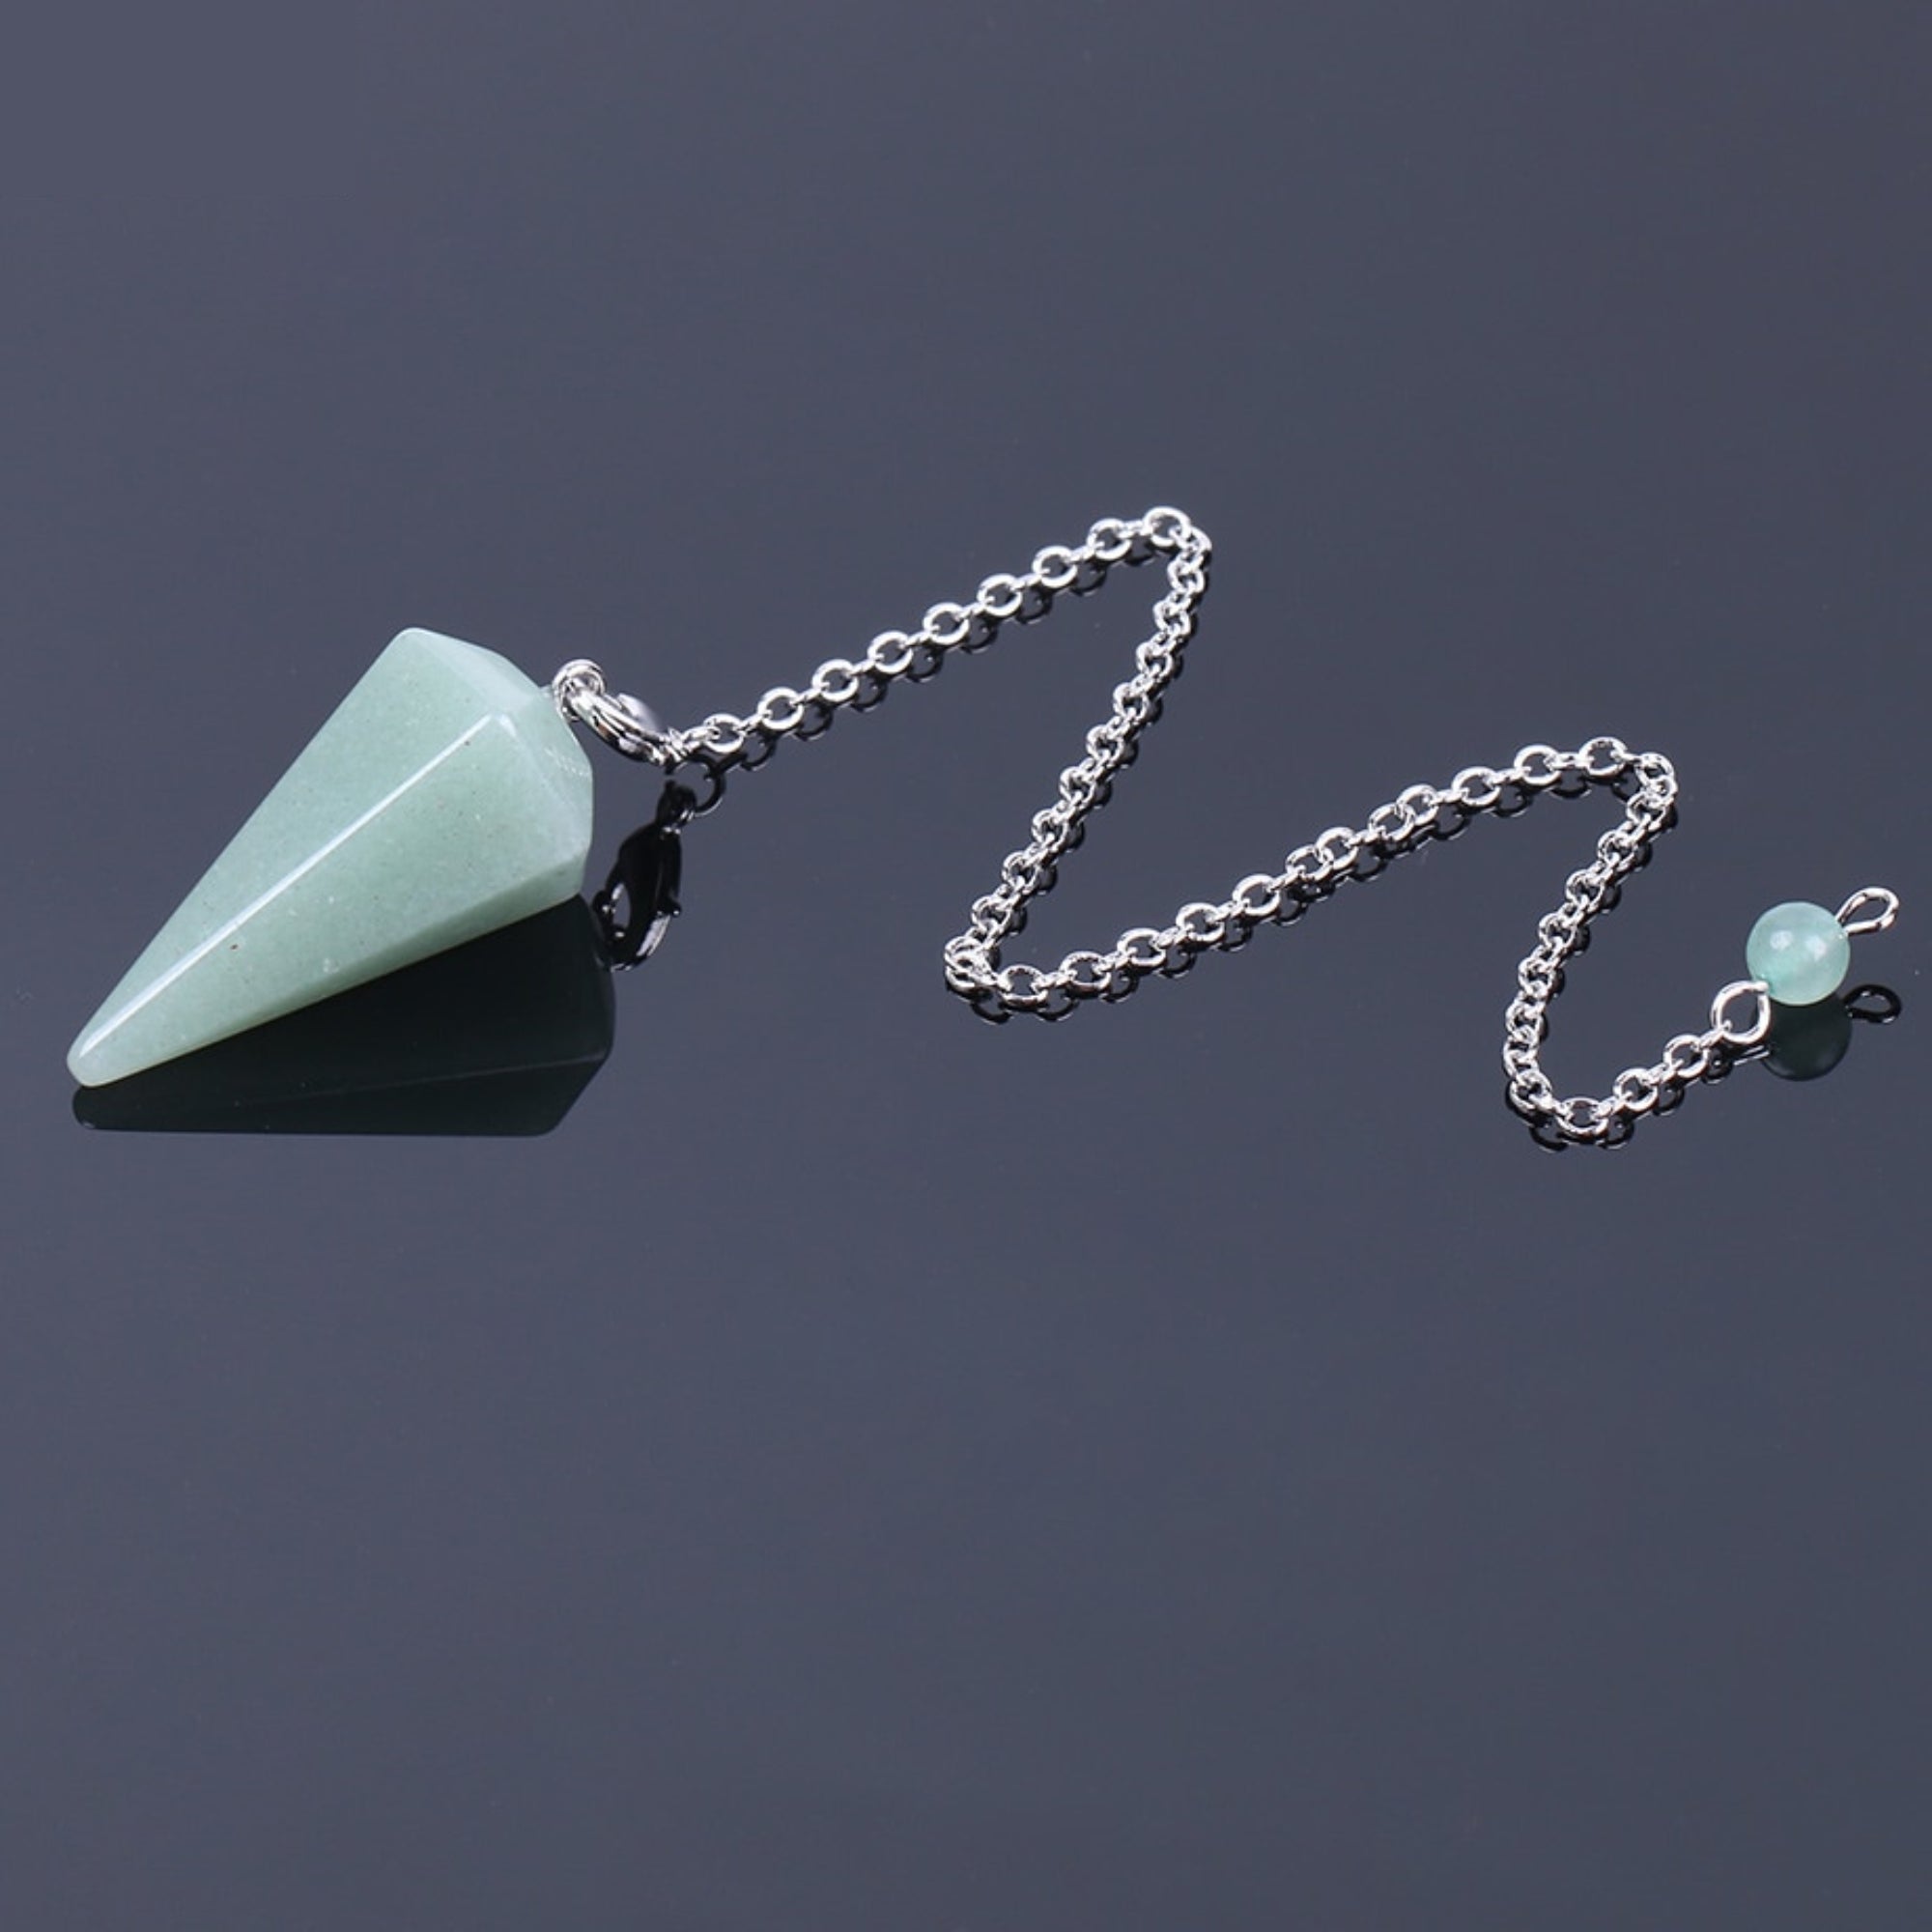 Healing Crystal Pendulum for Divination Dowsing Readings | Pink Quartz Pendulums Of Natural Gemstones For Fortune Telling | Apollo Tarot Shop